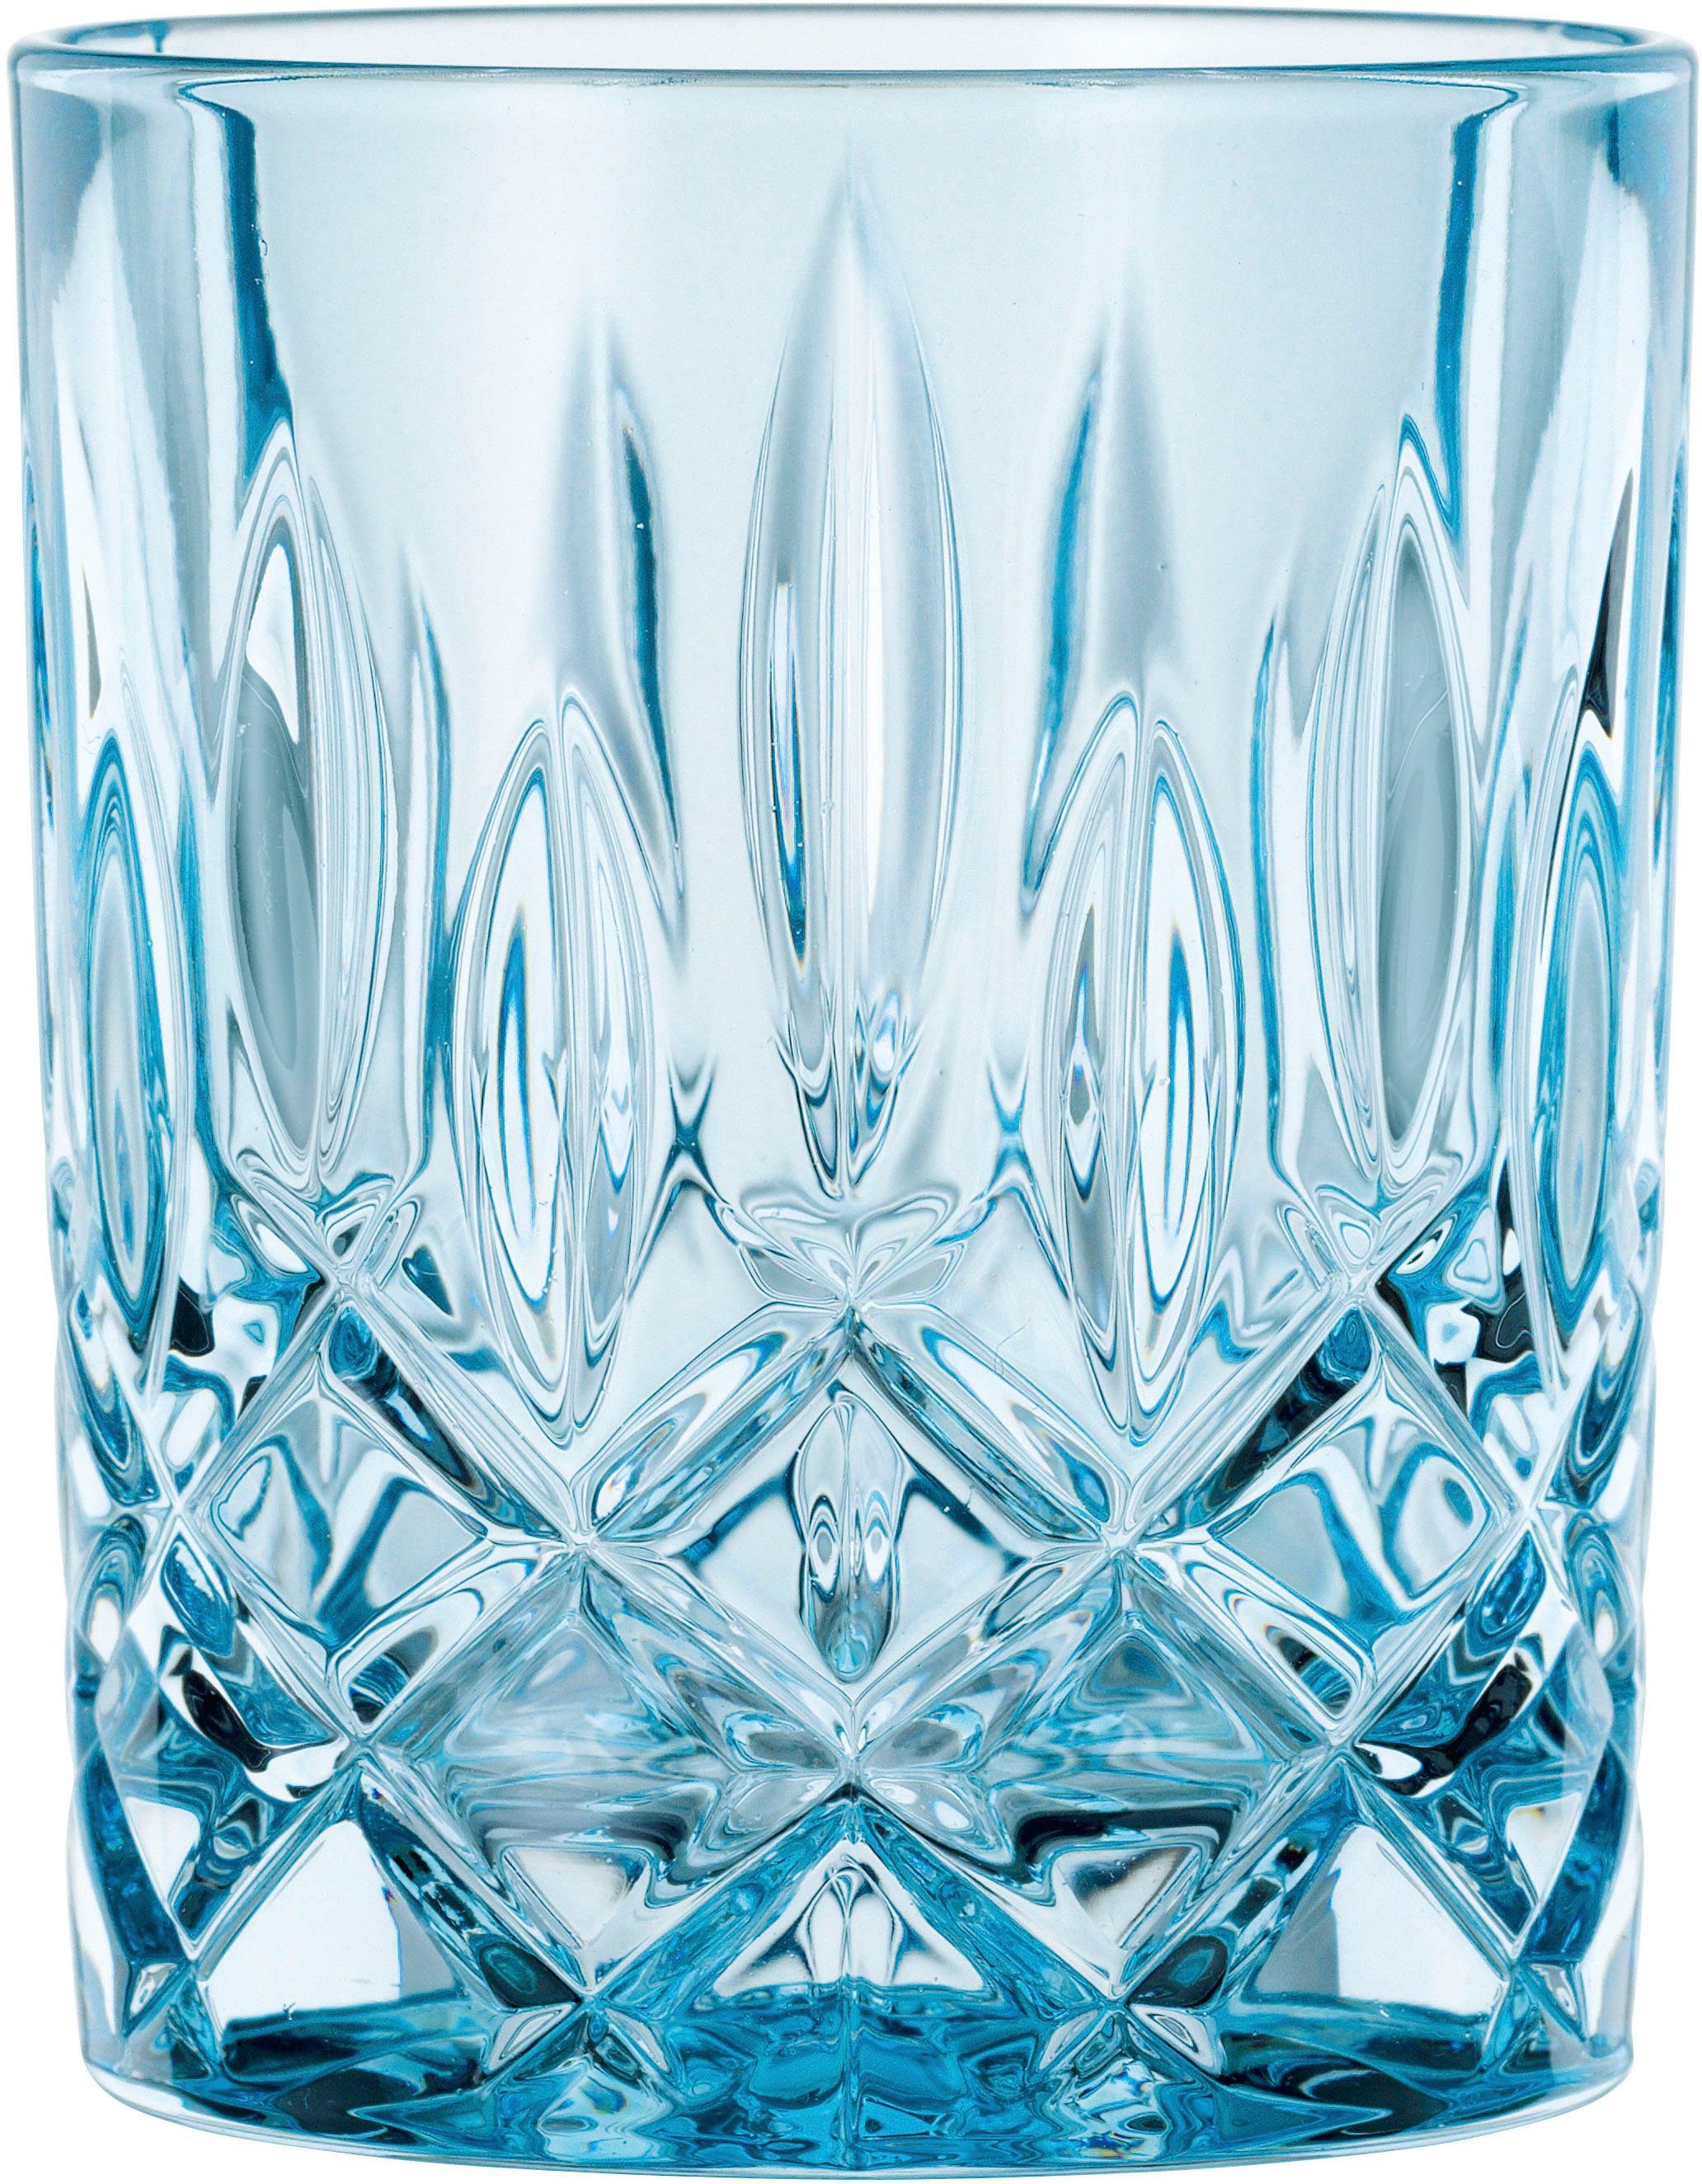 Nachtmann Whiskyglas Noblesse, Kristallglas, Made in Germany, 295 ml, 2-teilig aqua